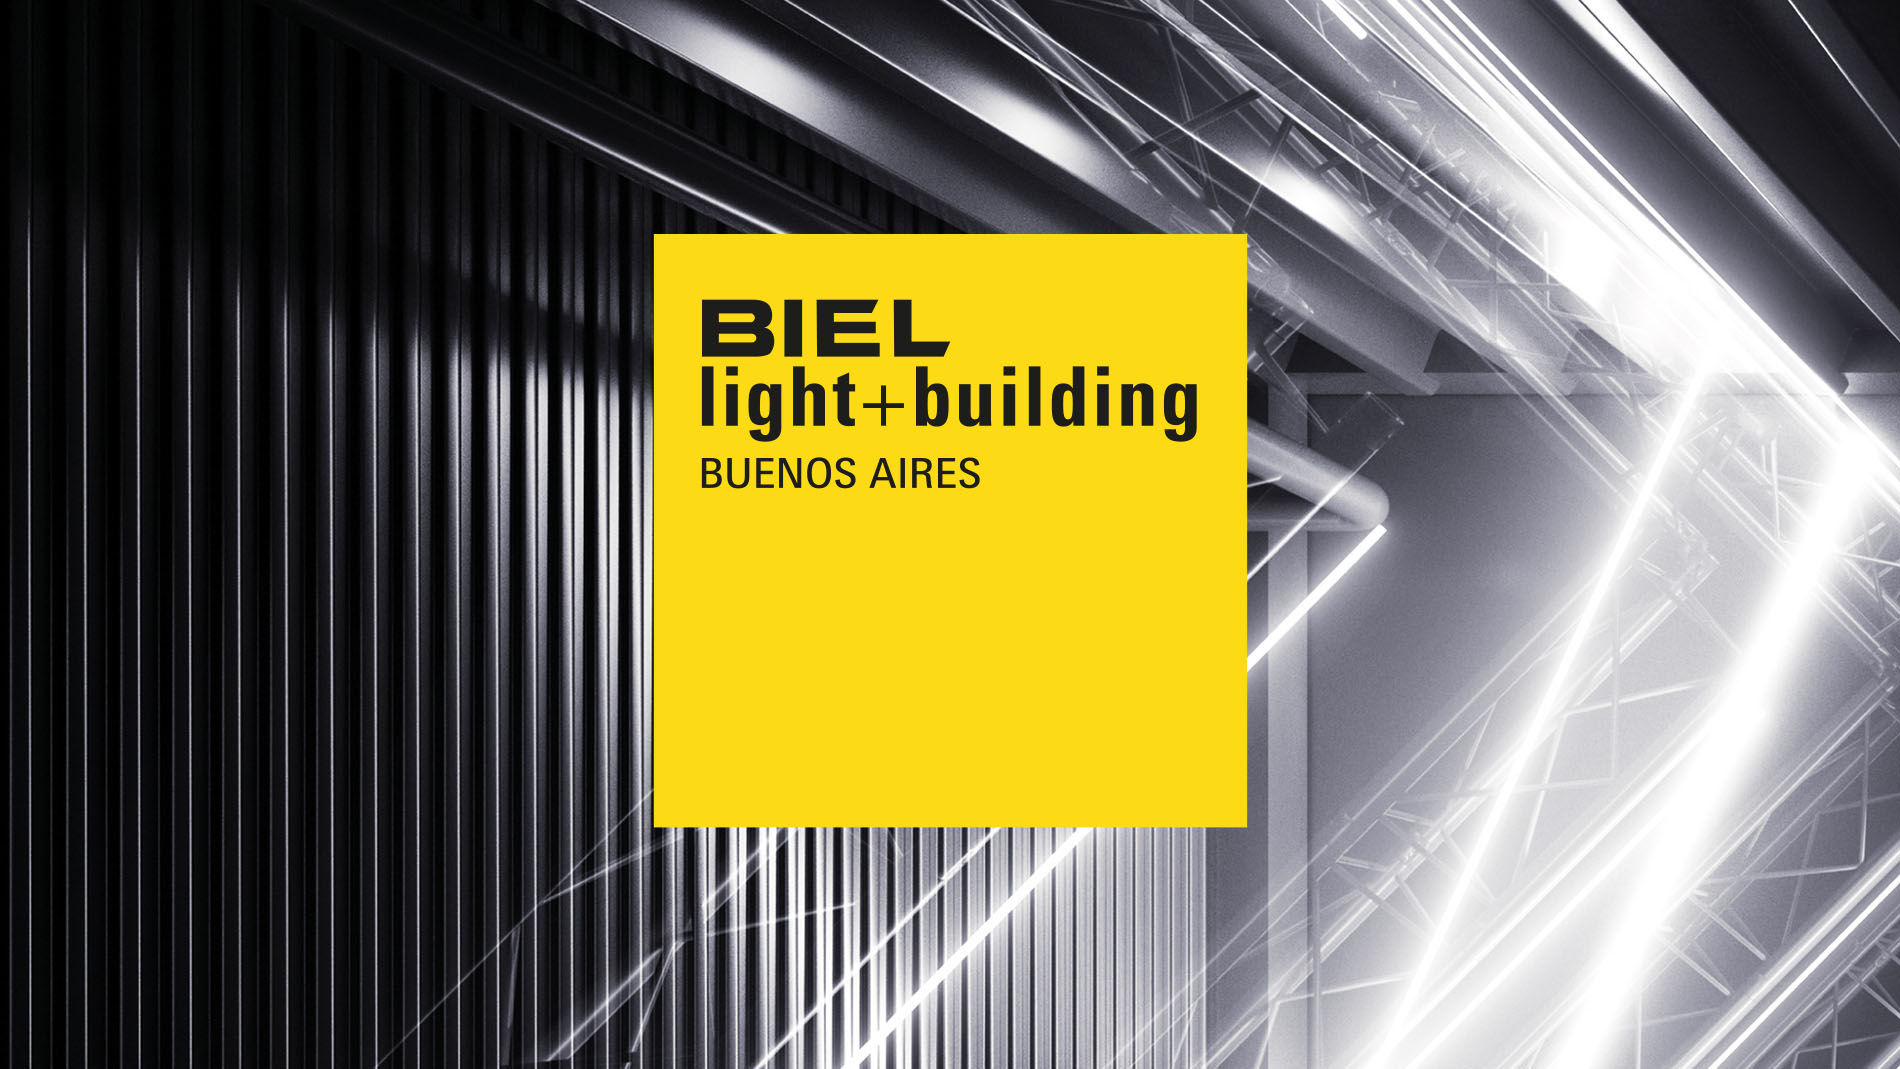 BIEL light + building Buenos Aires